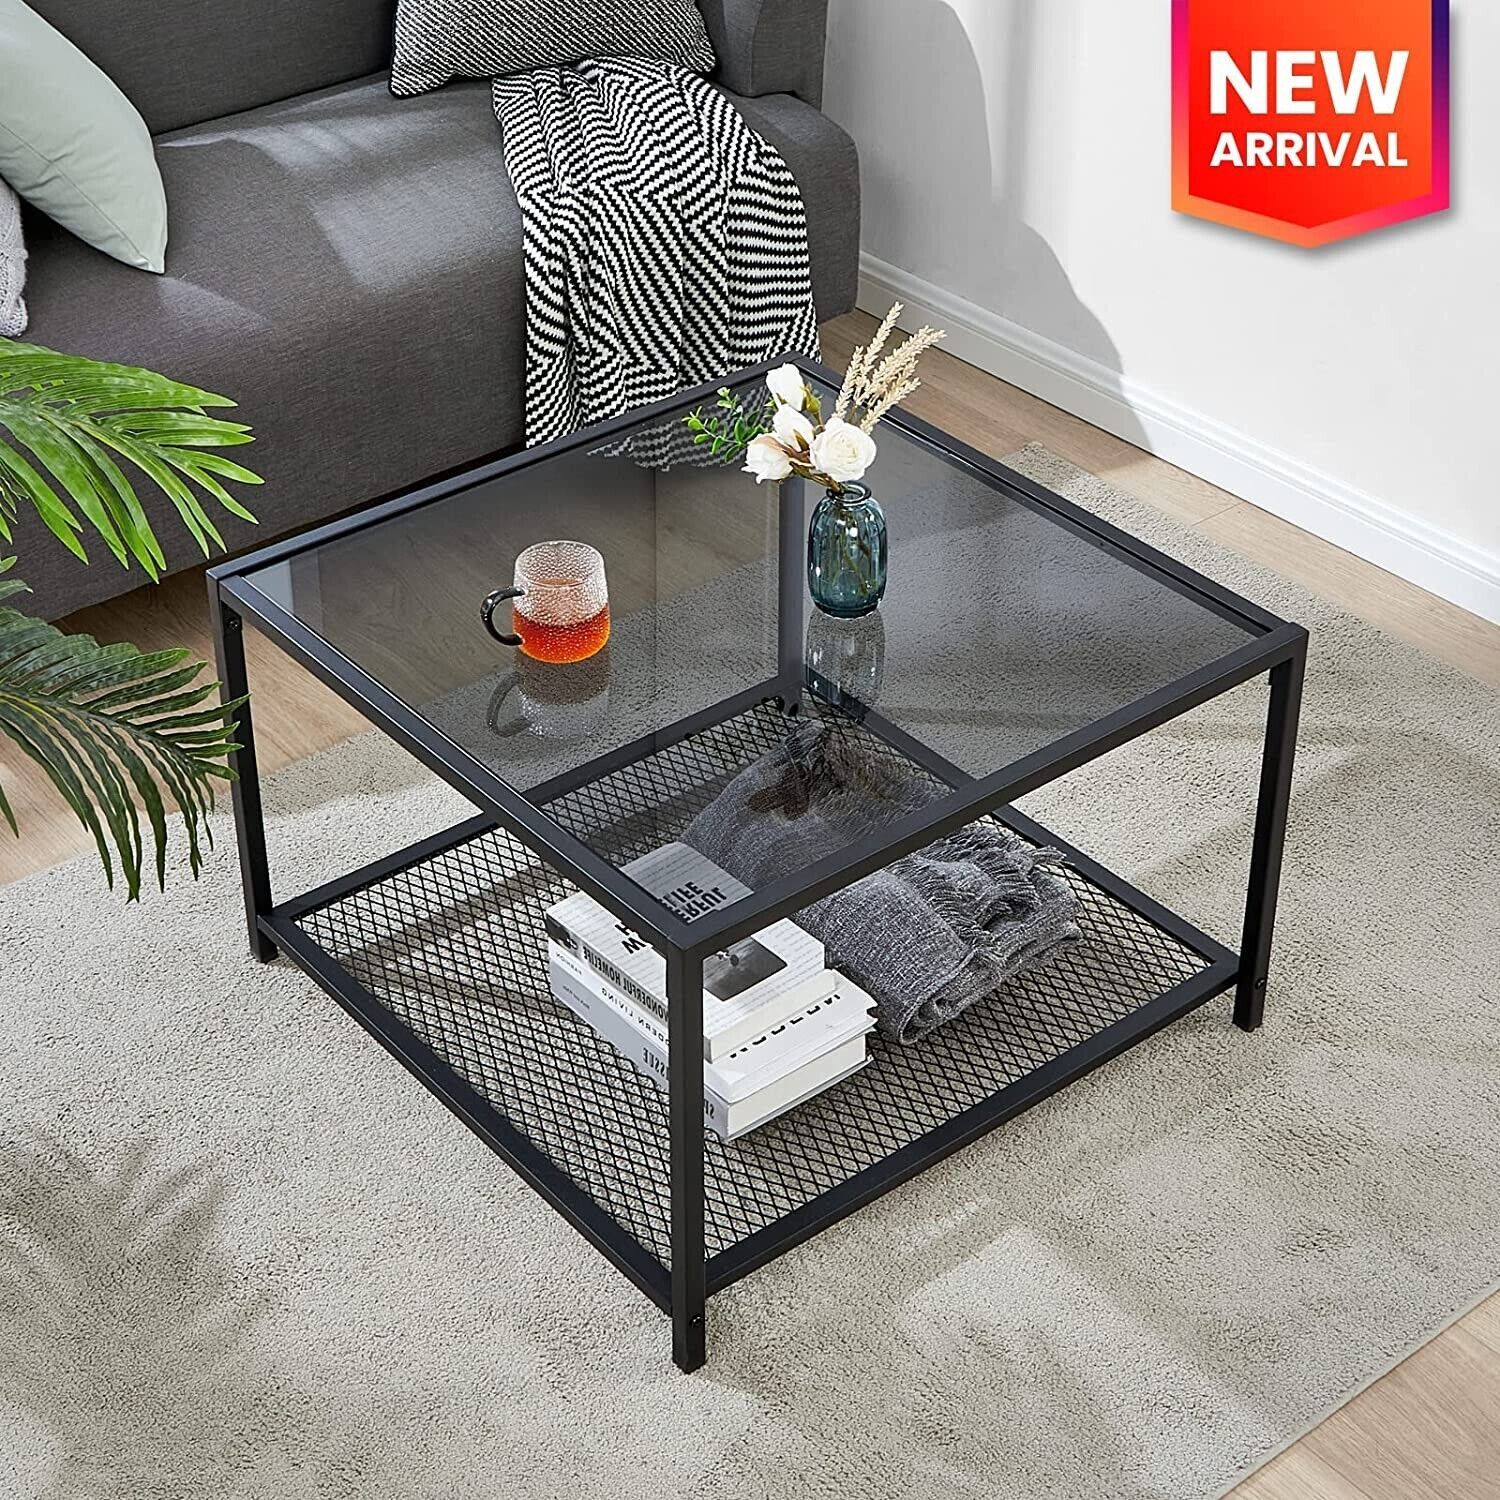 Glass Coffee Table Coffee Table With Storage Shelf Modern Industrial 2 Tier  New | Ebay Regarding Glass Coffee Tables With Storage Shelf (View 13 of 15)